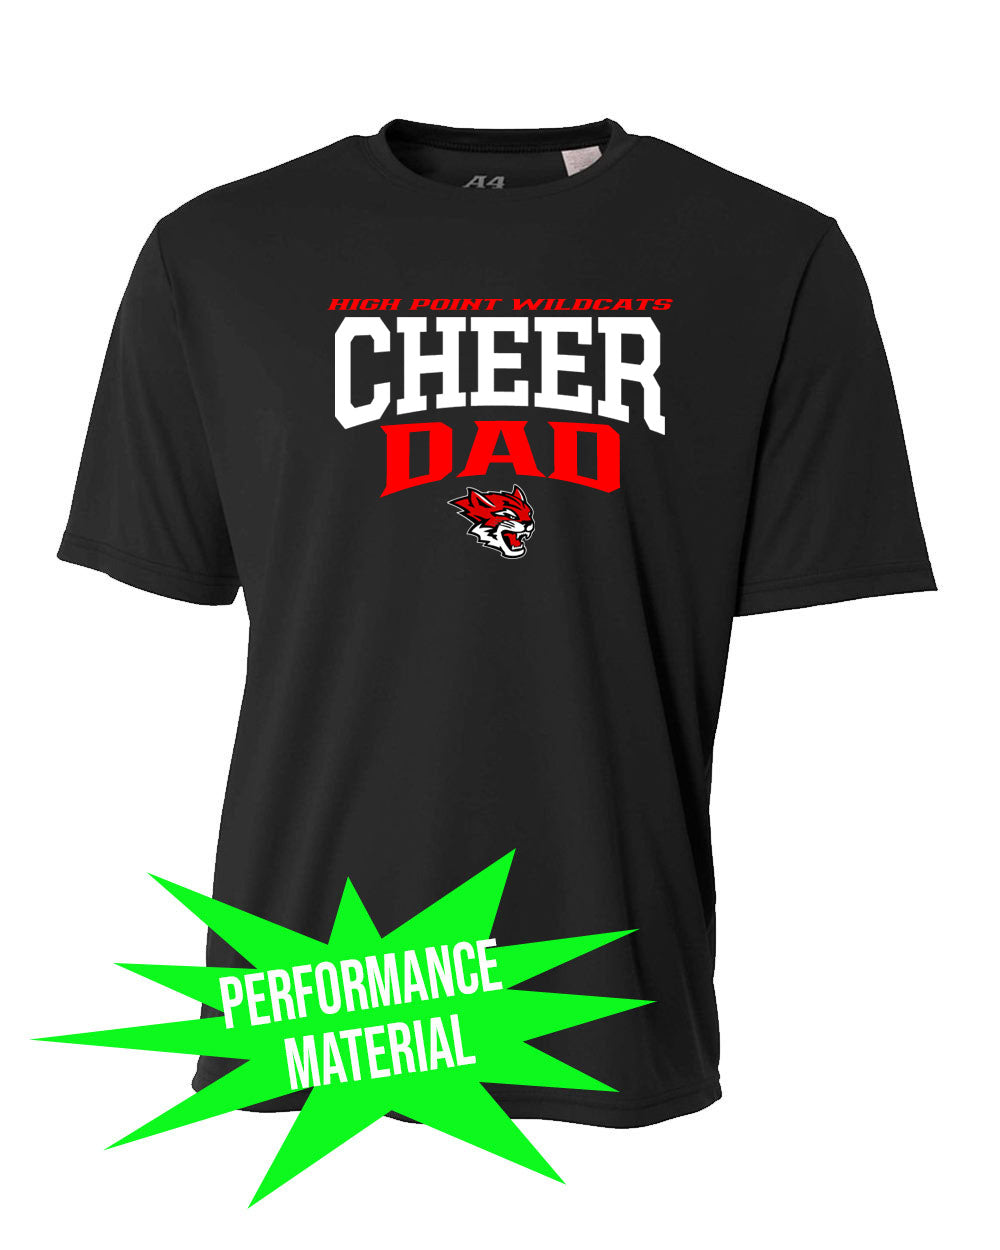 Wildcats Cheer Performance Material design 6 T-Shirt